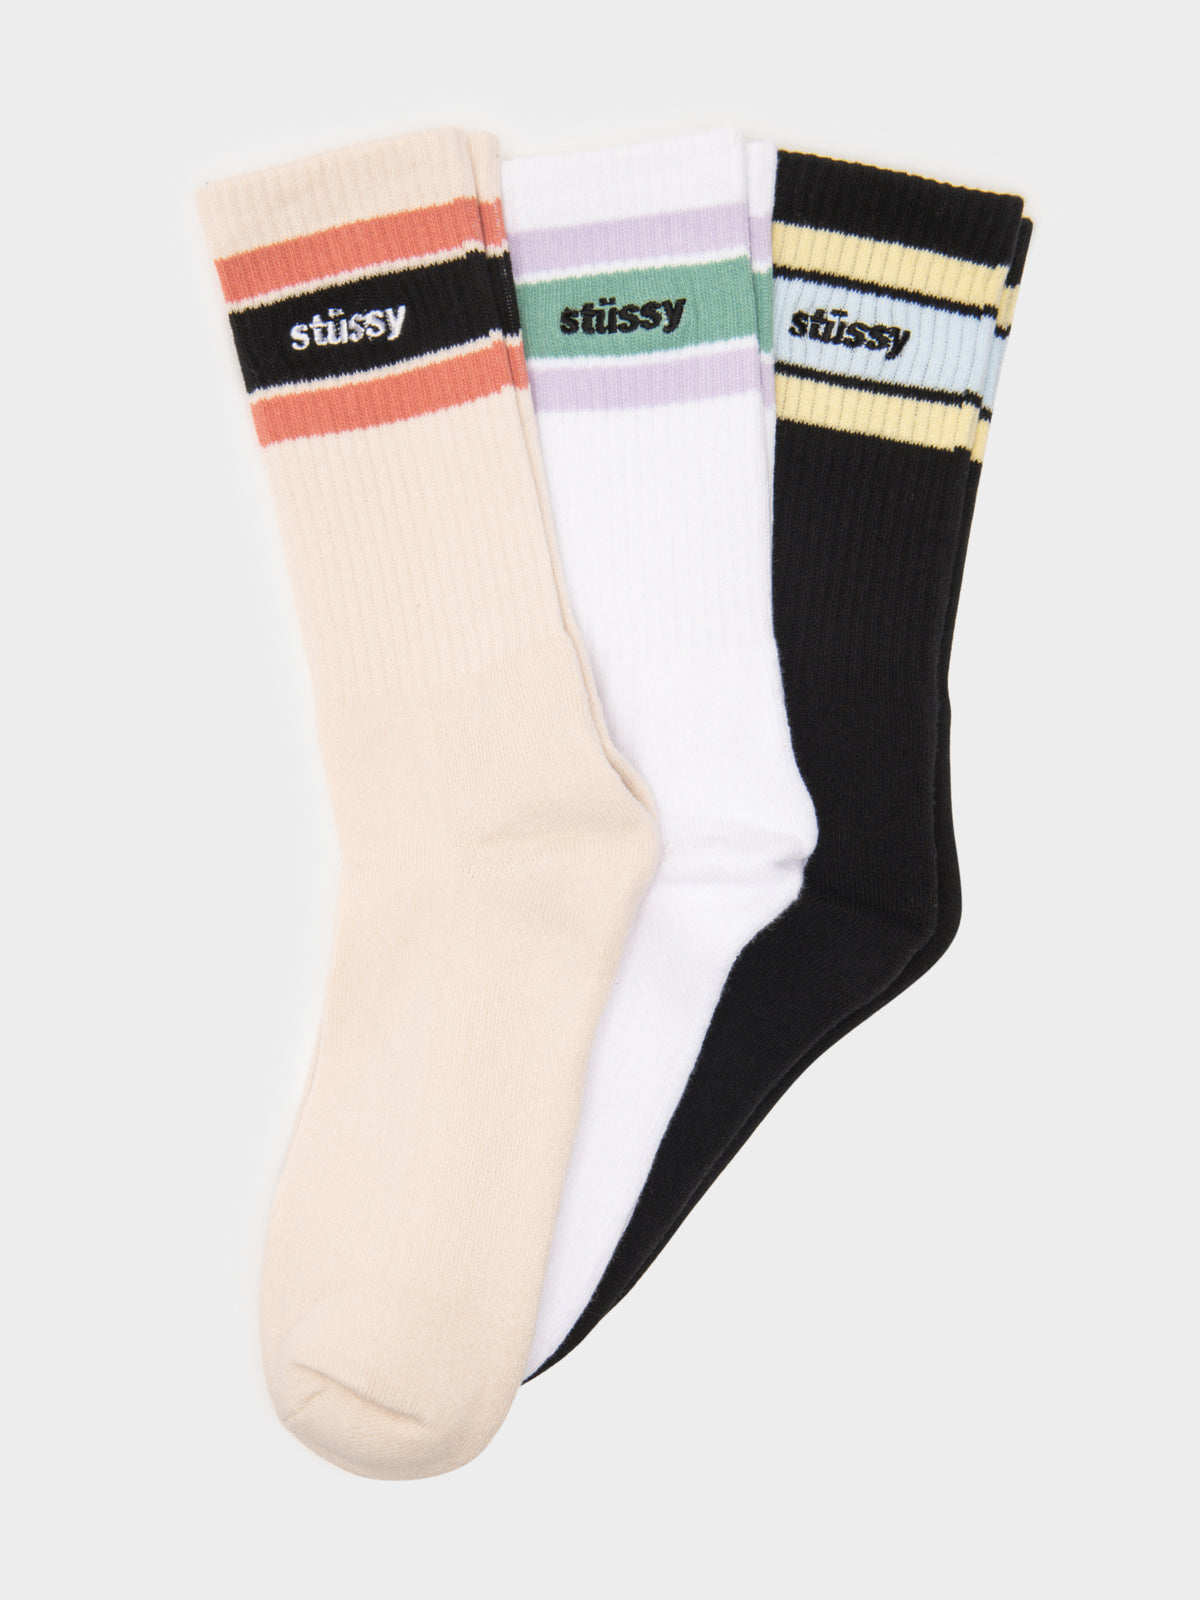 3 Pairs of Italic Sport Socks in Peach, White &amp; Black